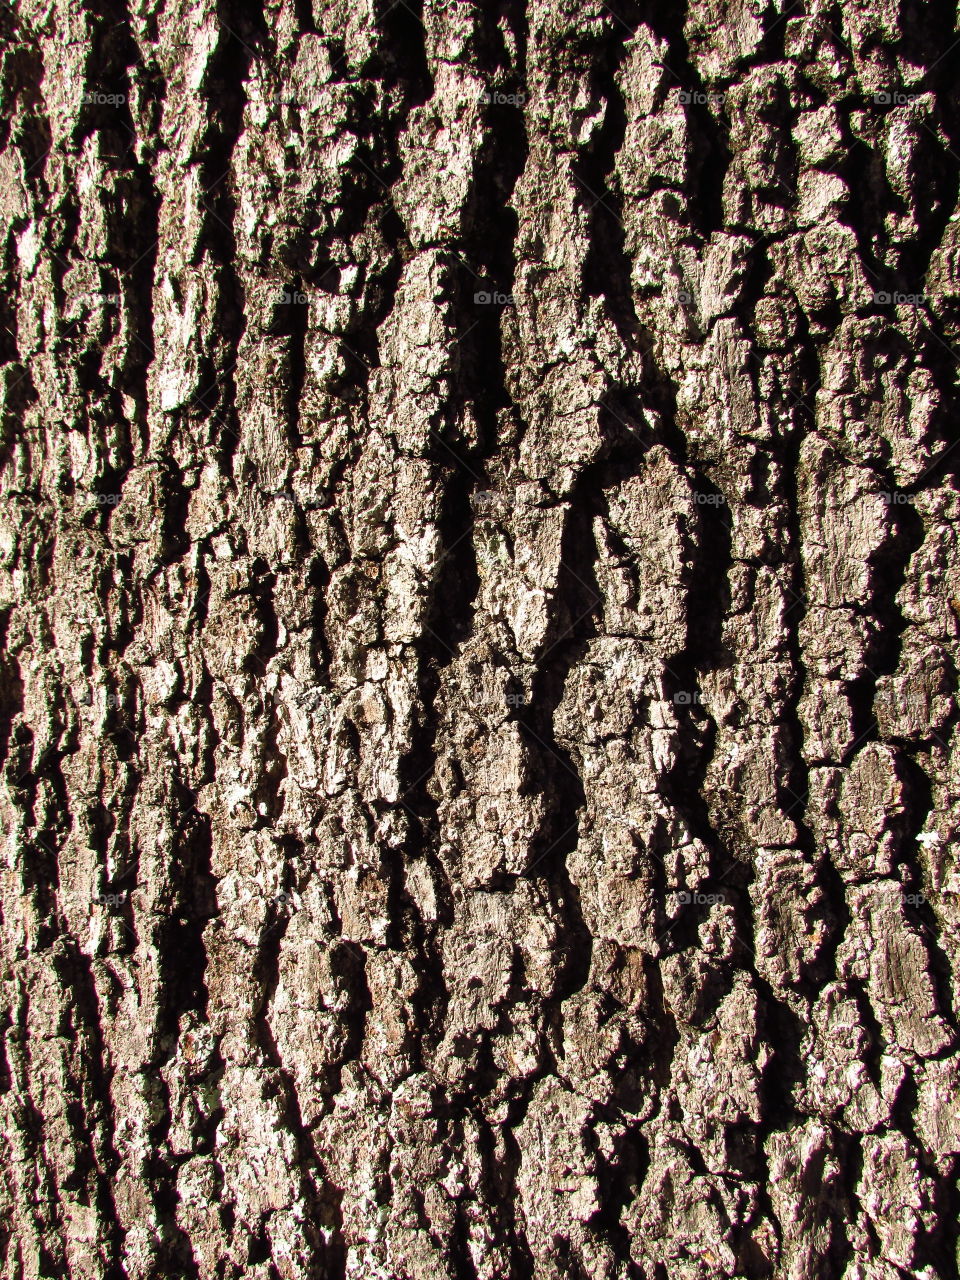 Up close shot of tree bark